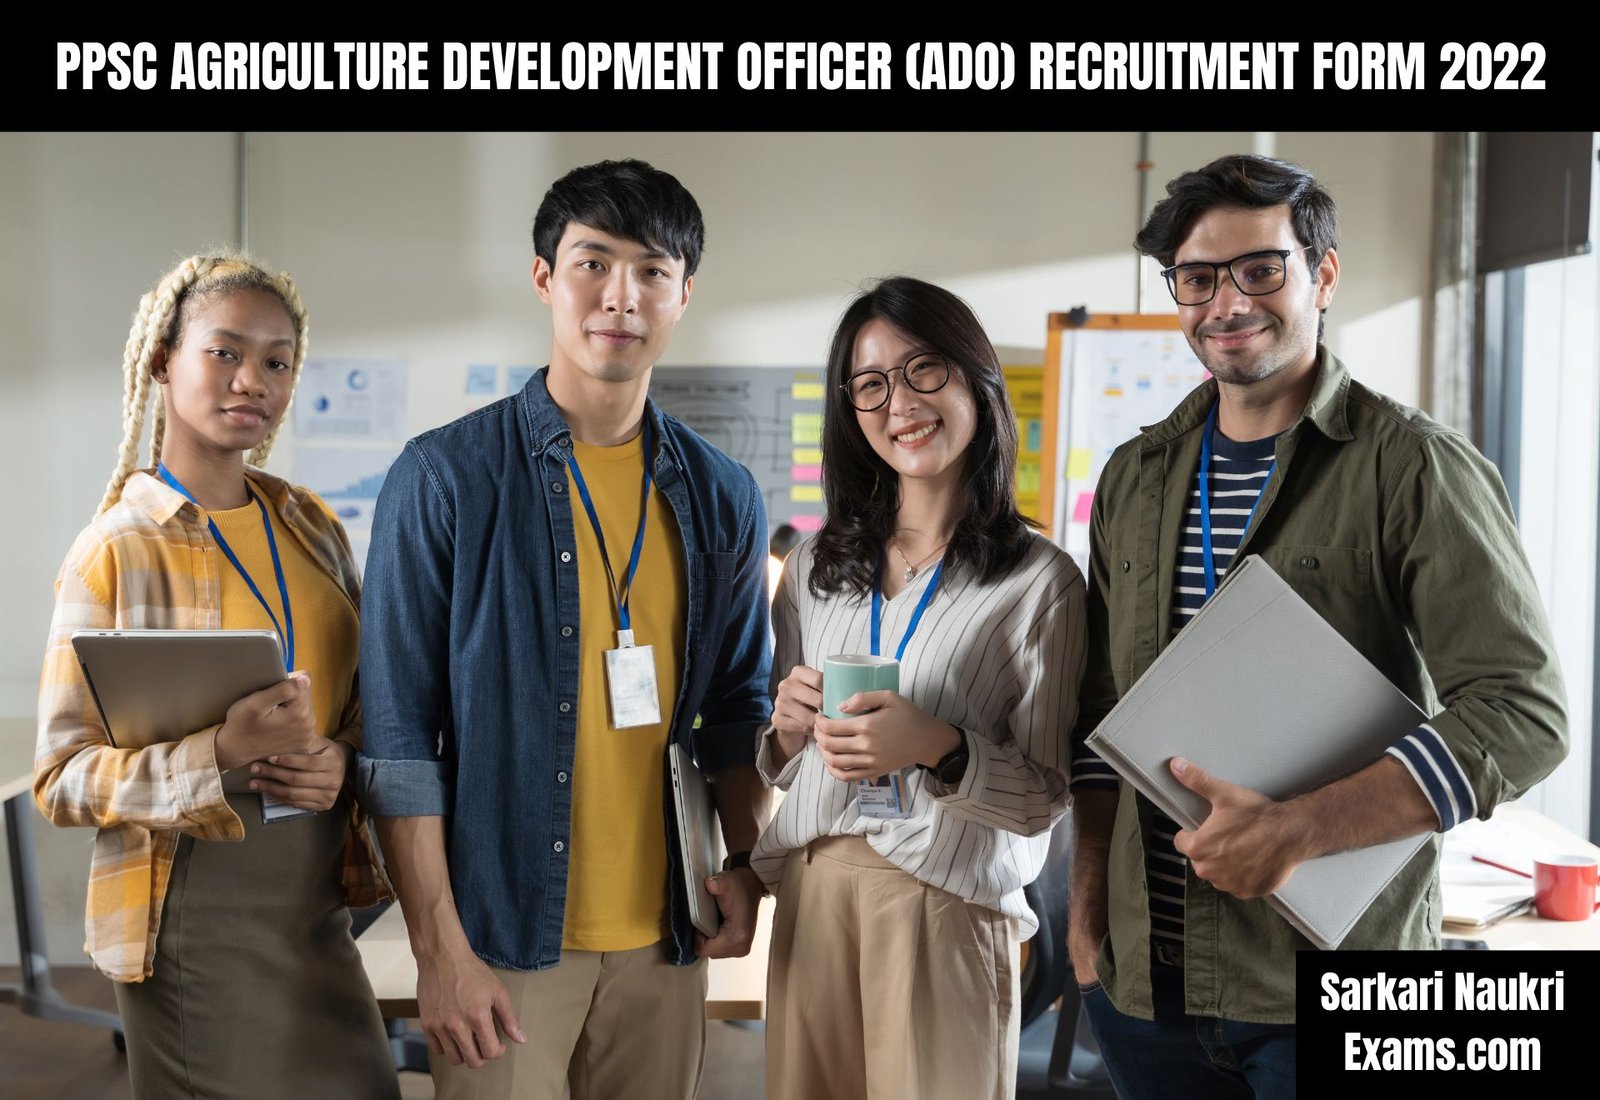 PPSC Agriculture Development Officer (ADO) Recruitment Form 2022